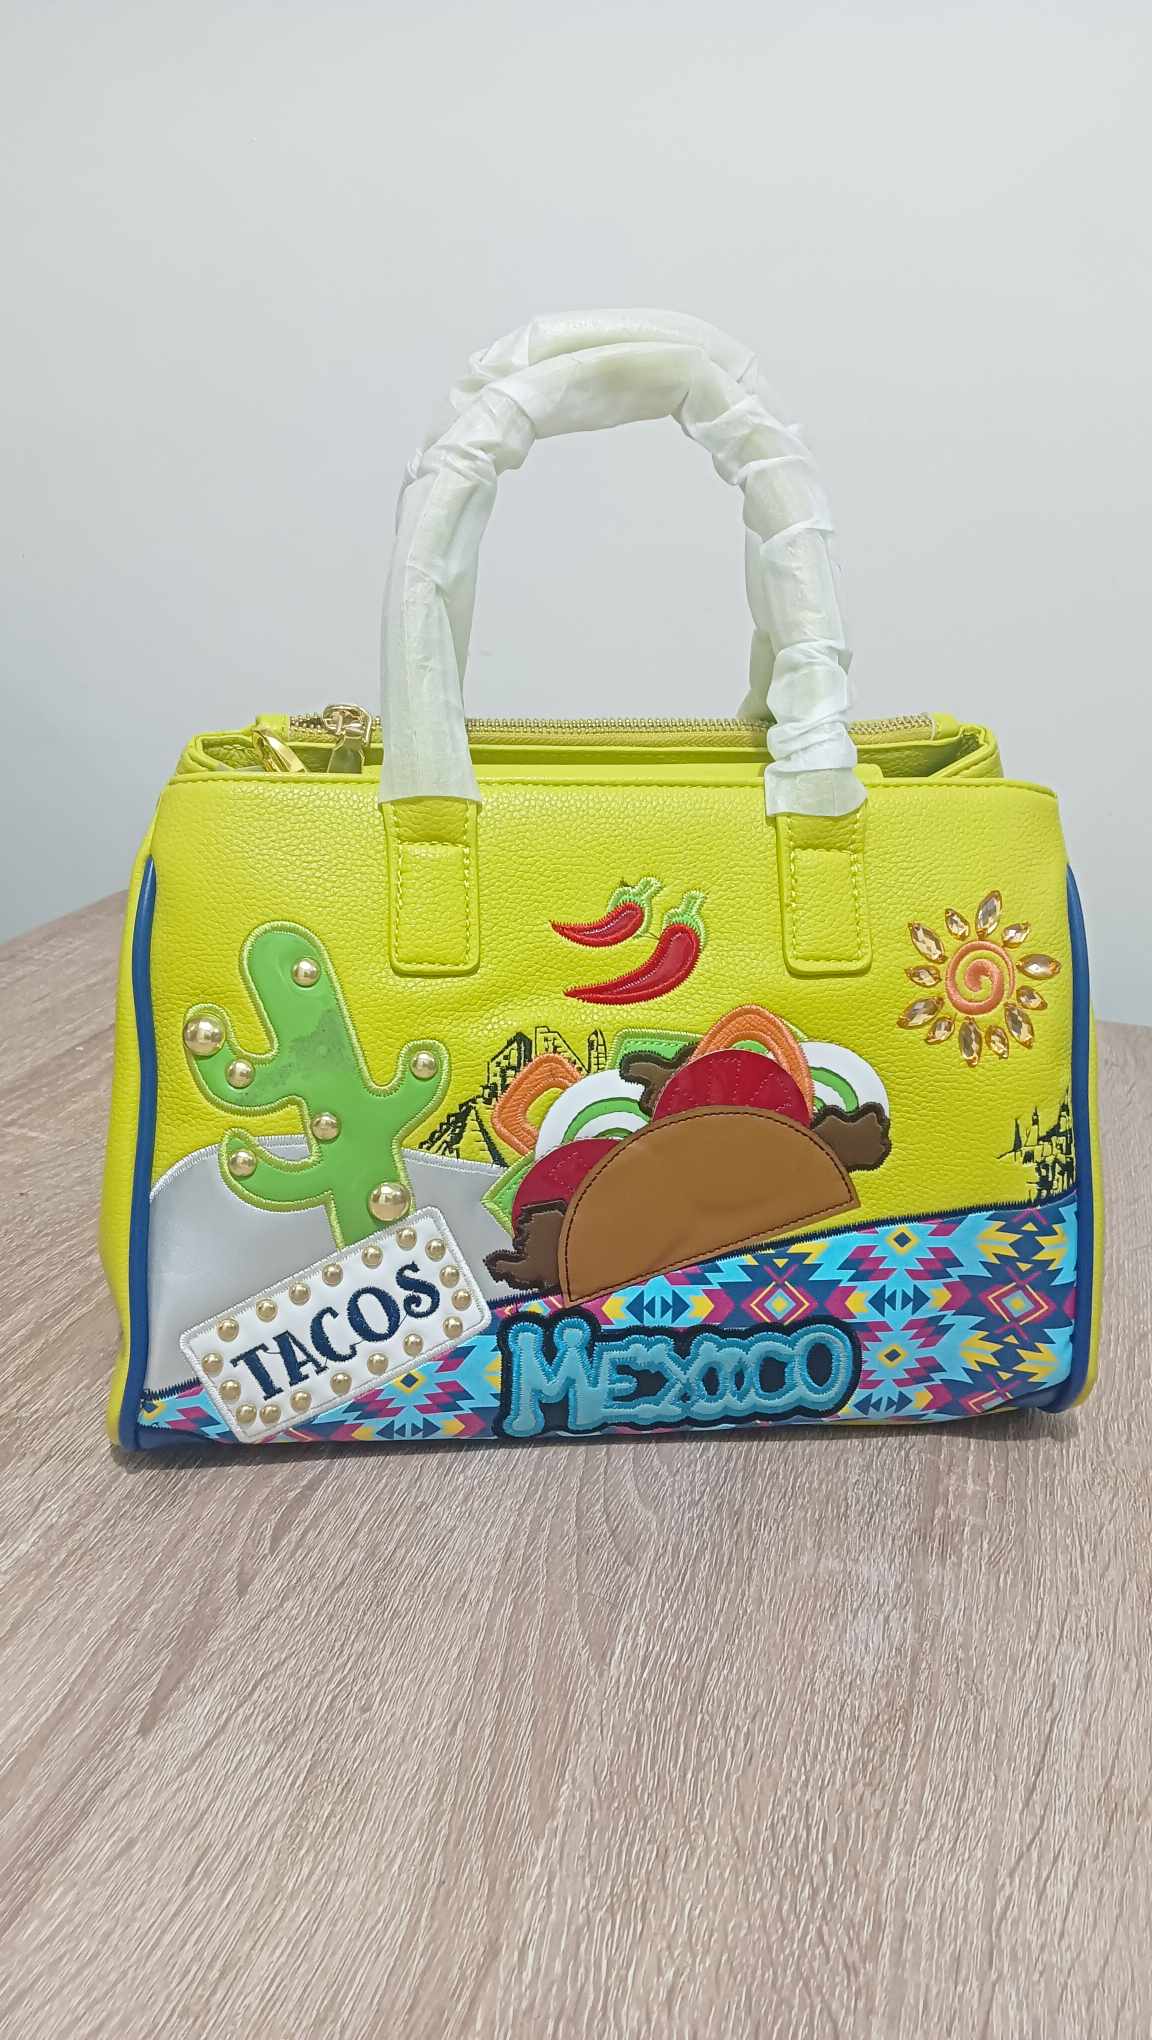 Taco's bag